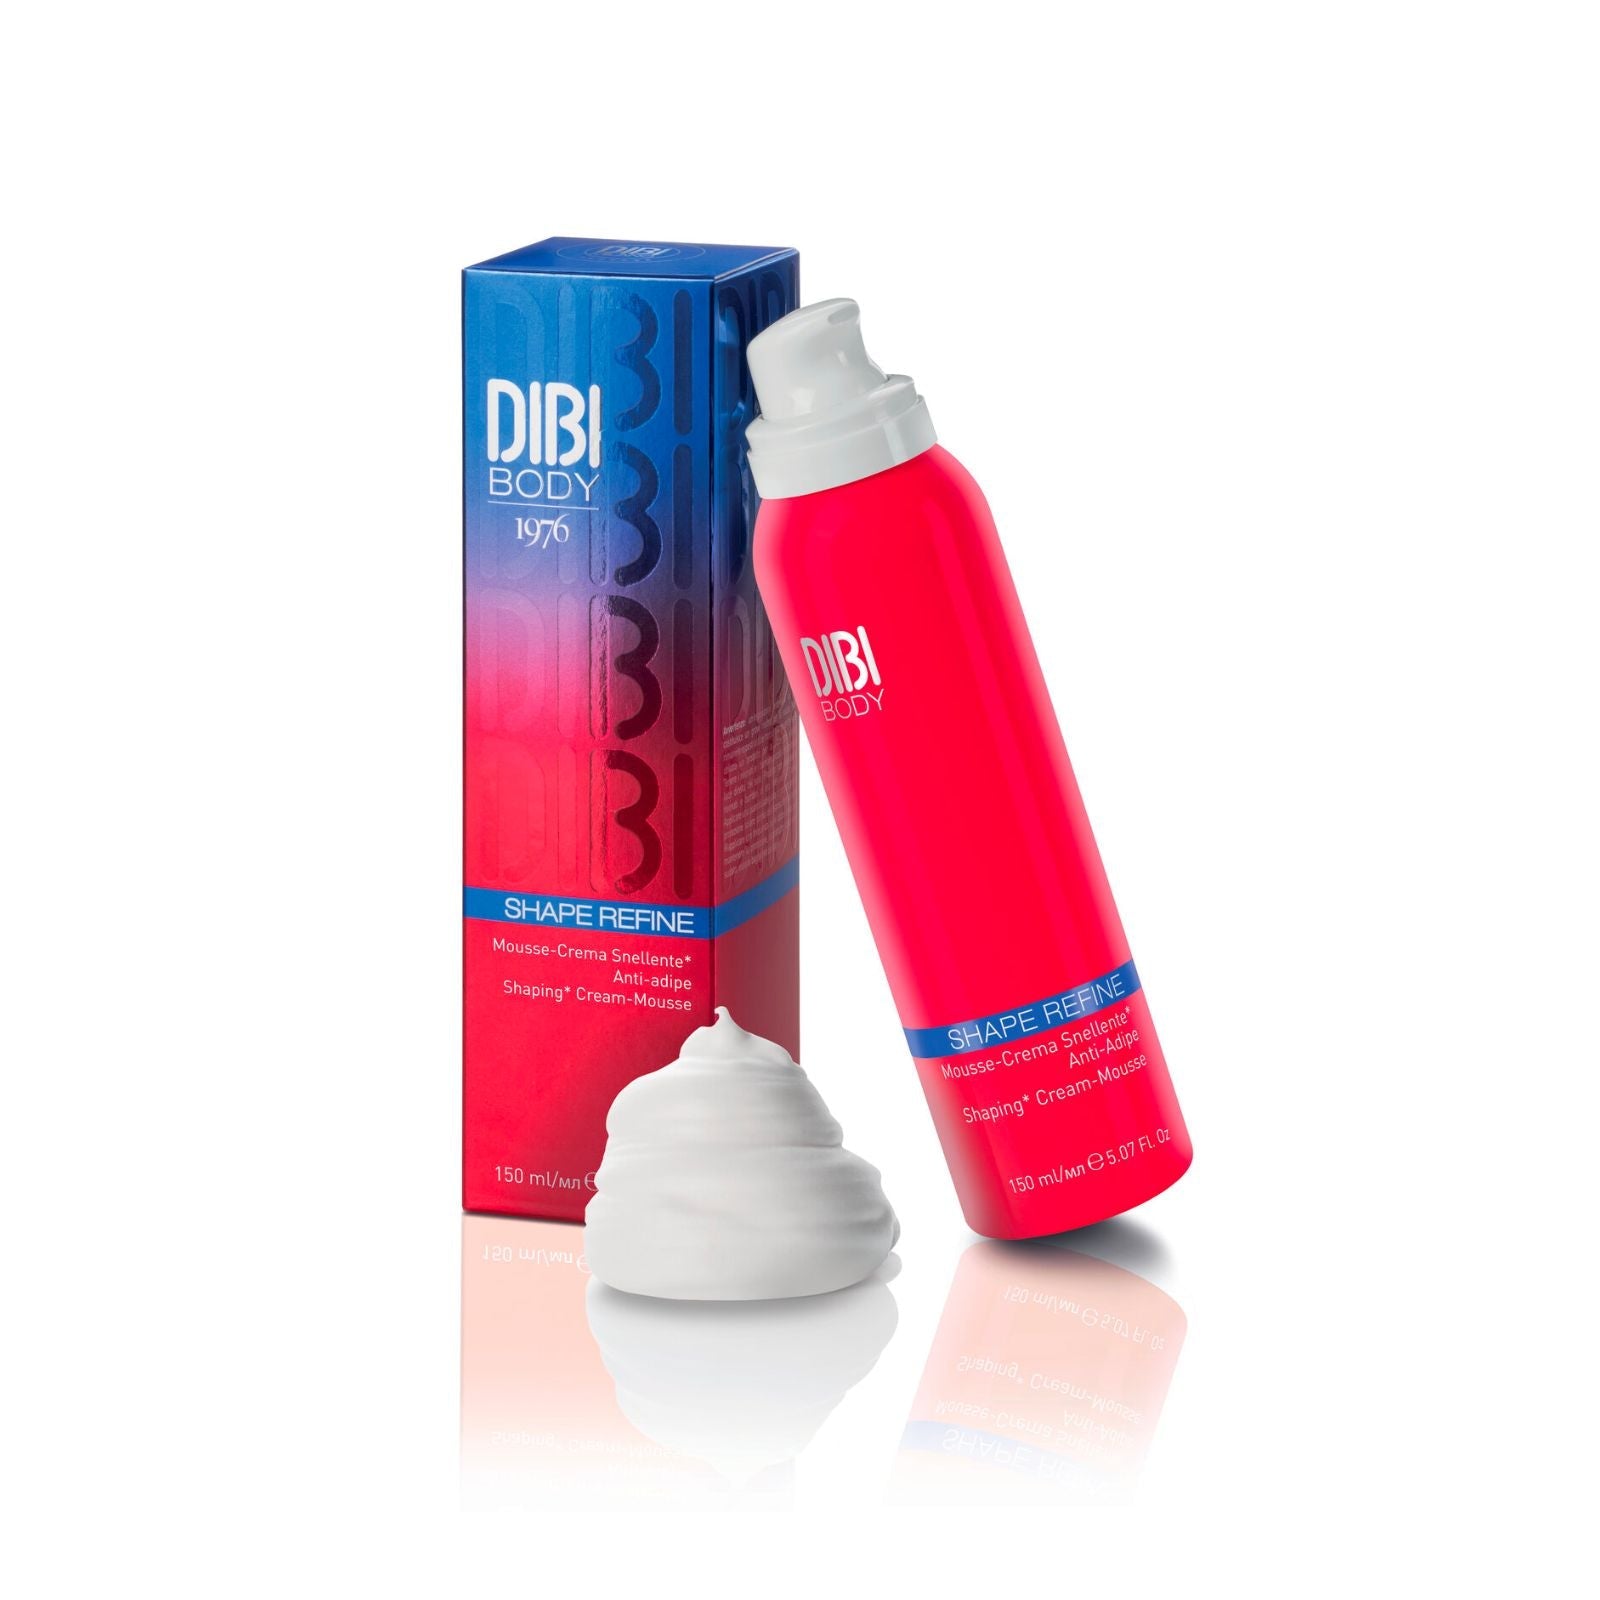 DIBI Milano DIBI Milano | Shape Refine Shaping Cream-Mousse | 150ml - SkinShop